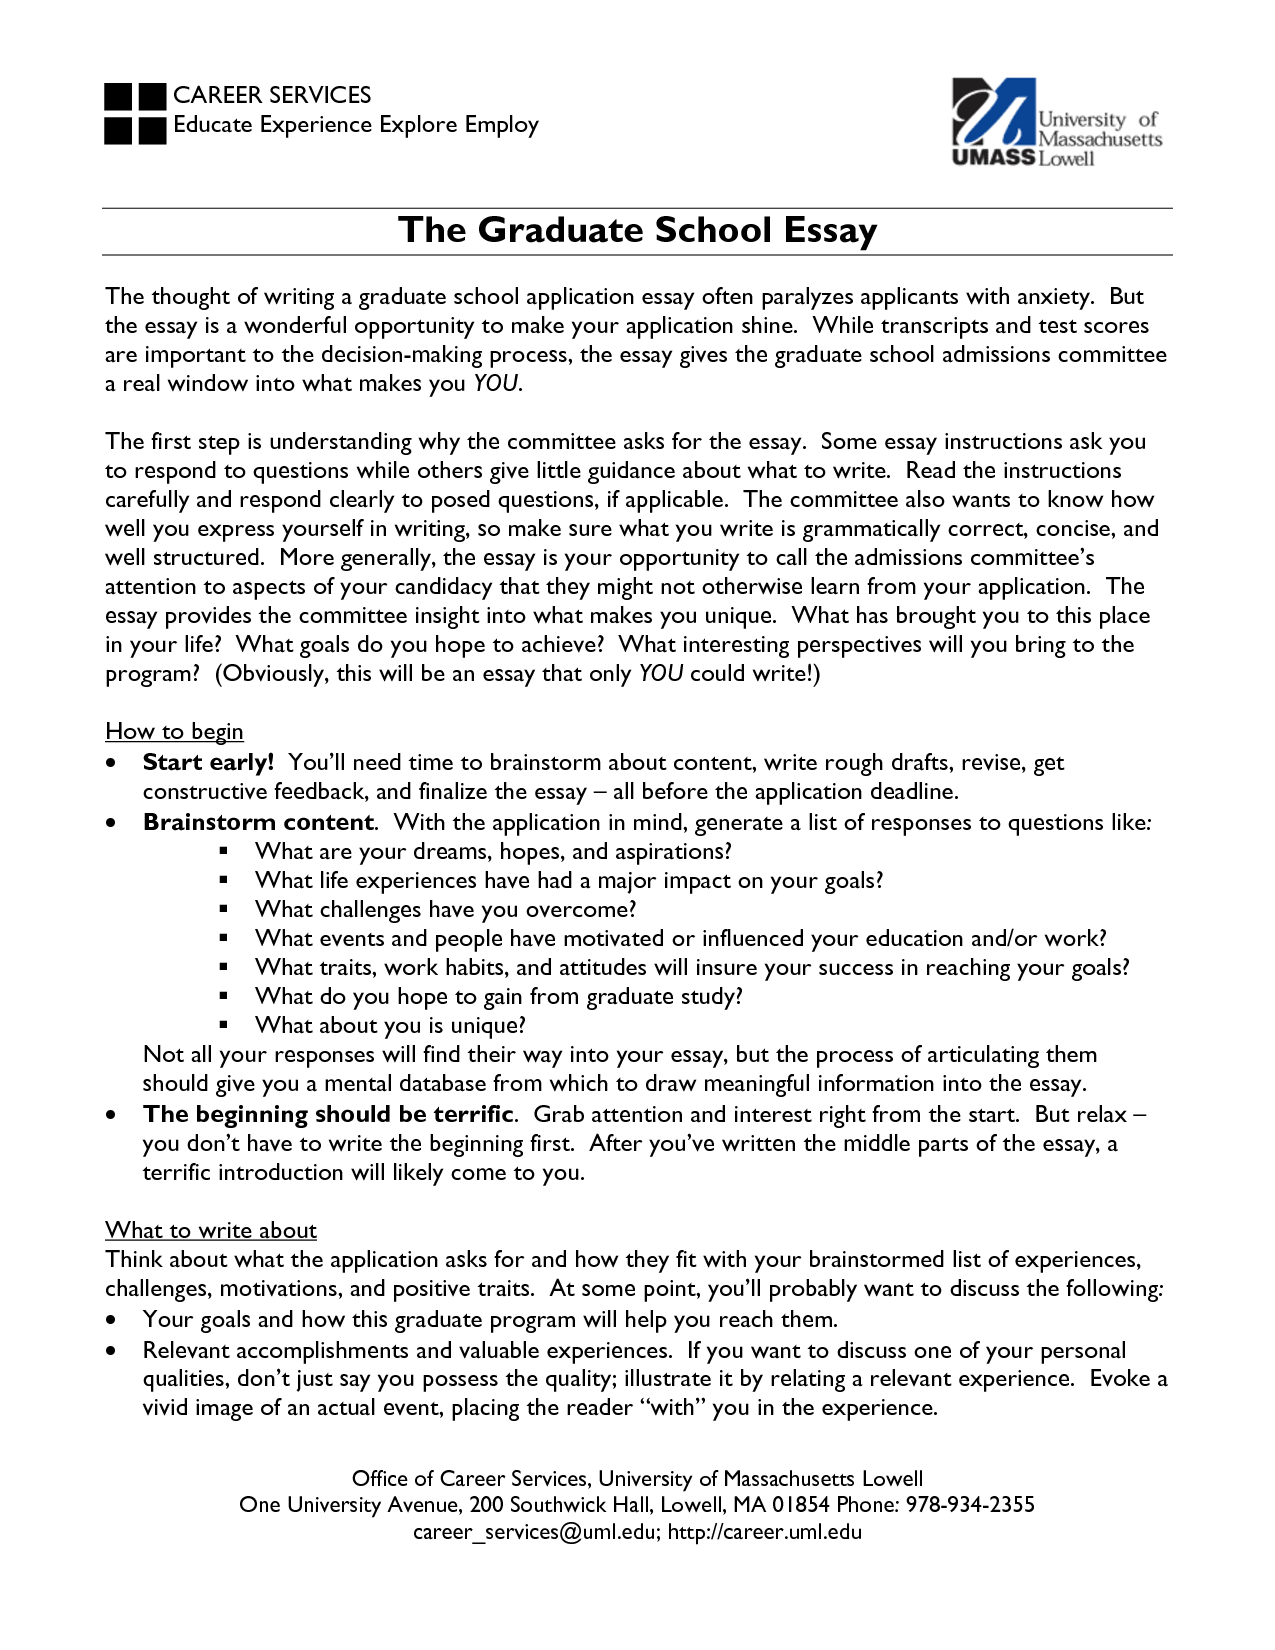 Personal essay for graduate school application best